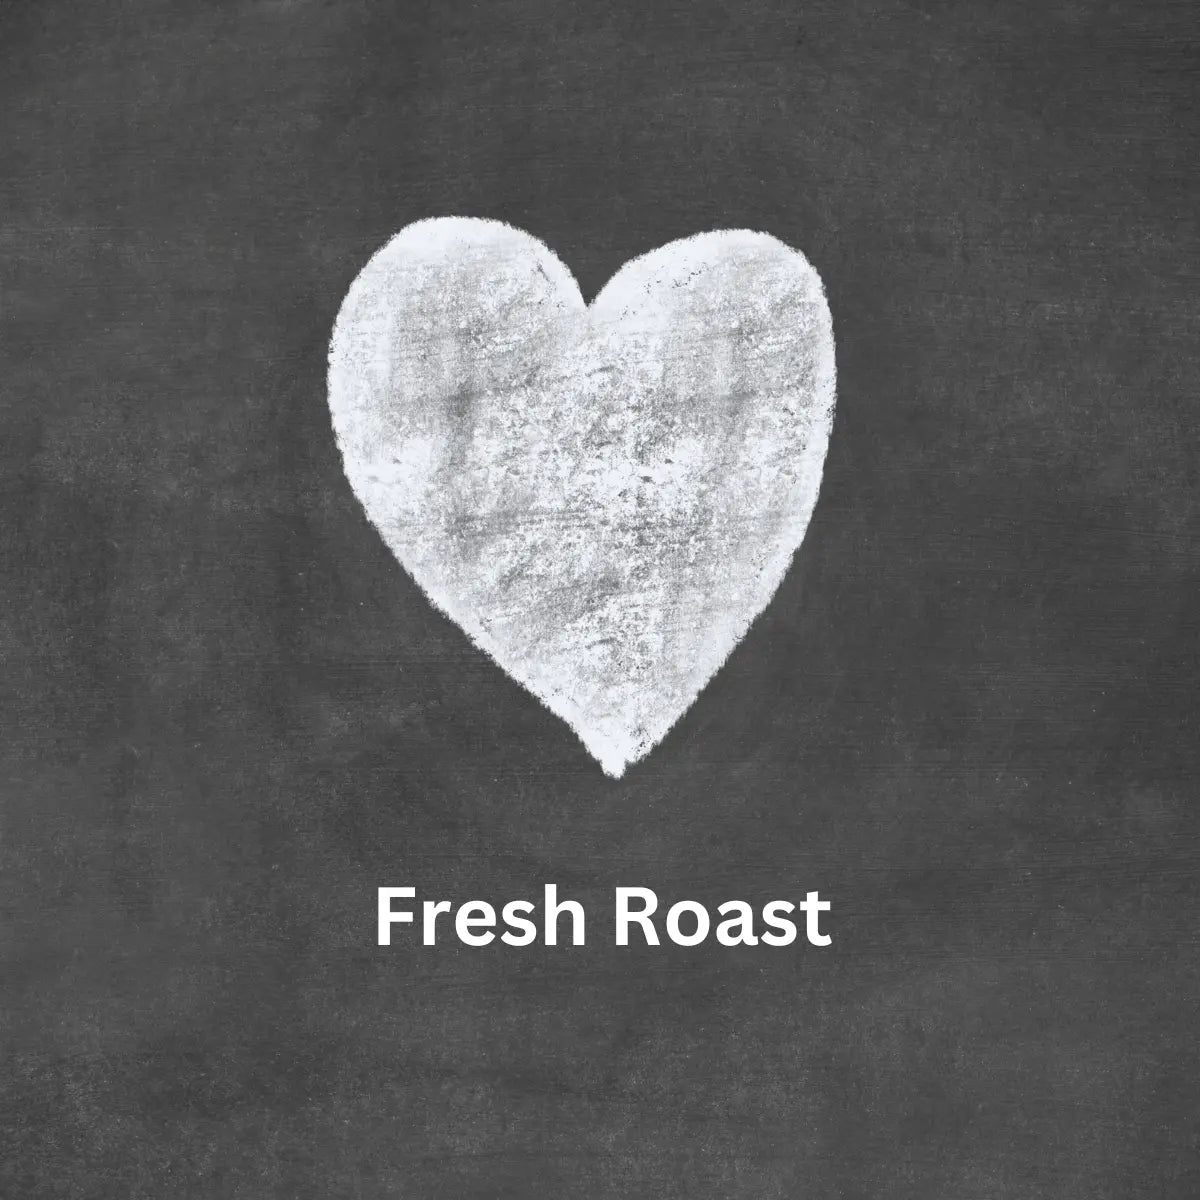 Only a fresh roast has peak flavor